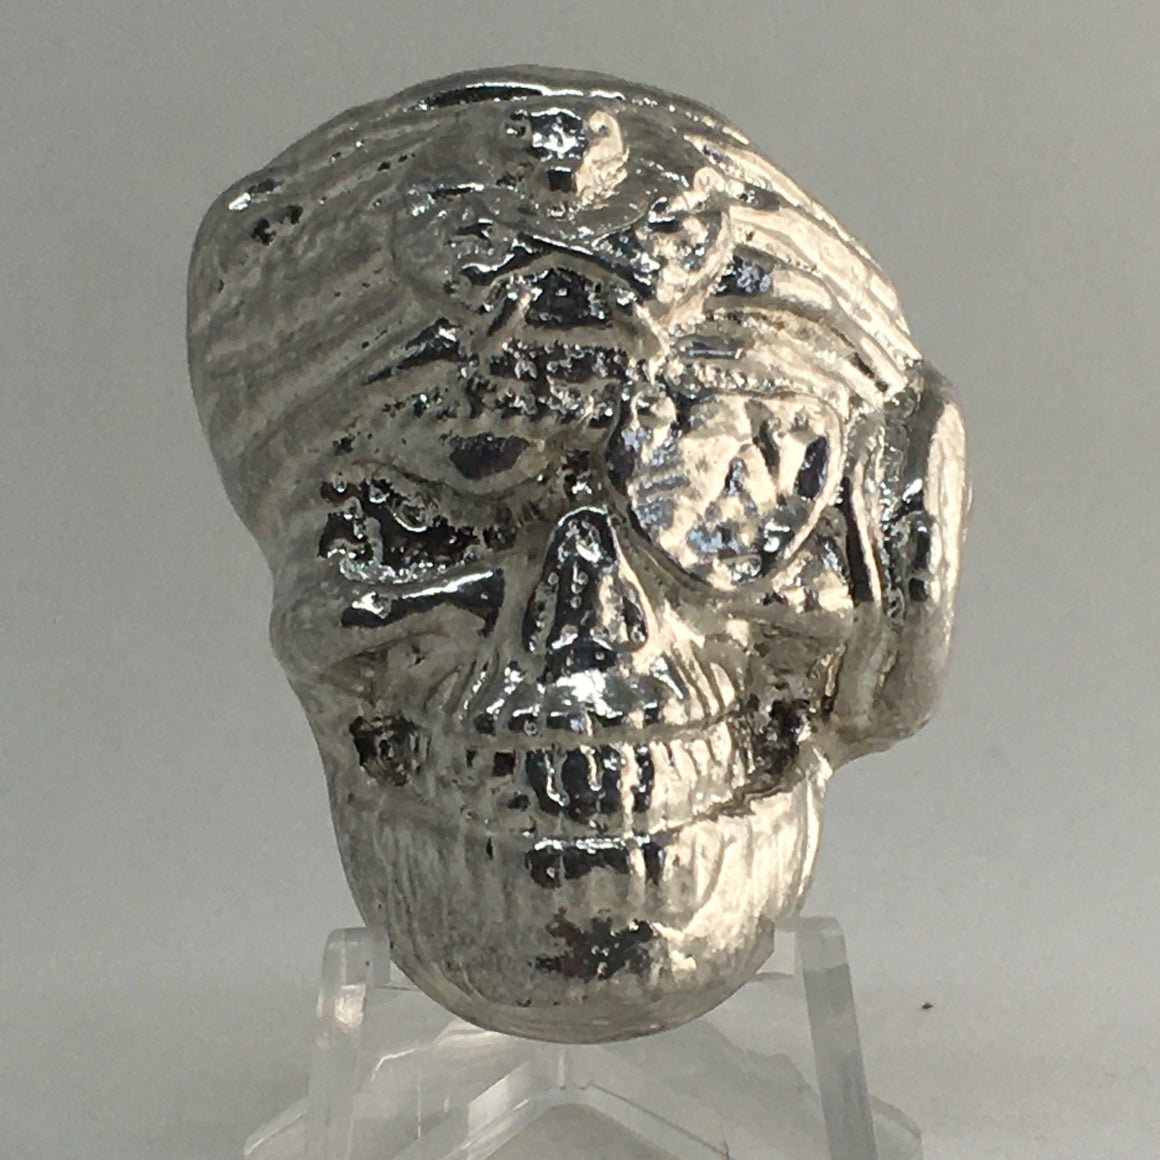 Pirate Skull by Tomoko's Enterprize, 4oz .999 Fine Silver Hand Poured Art